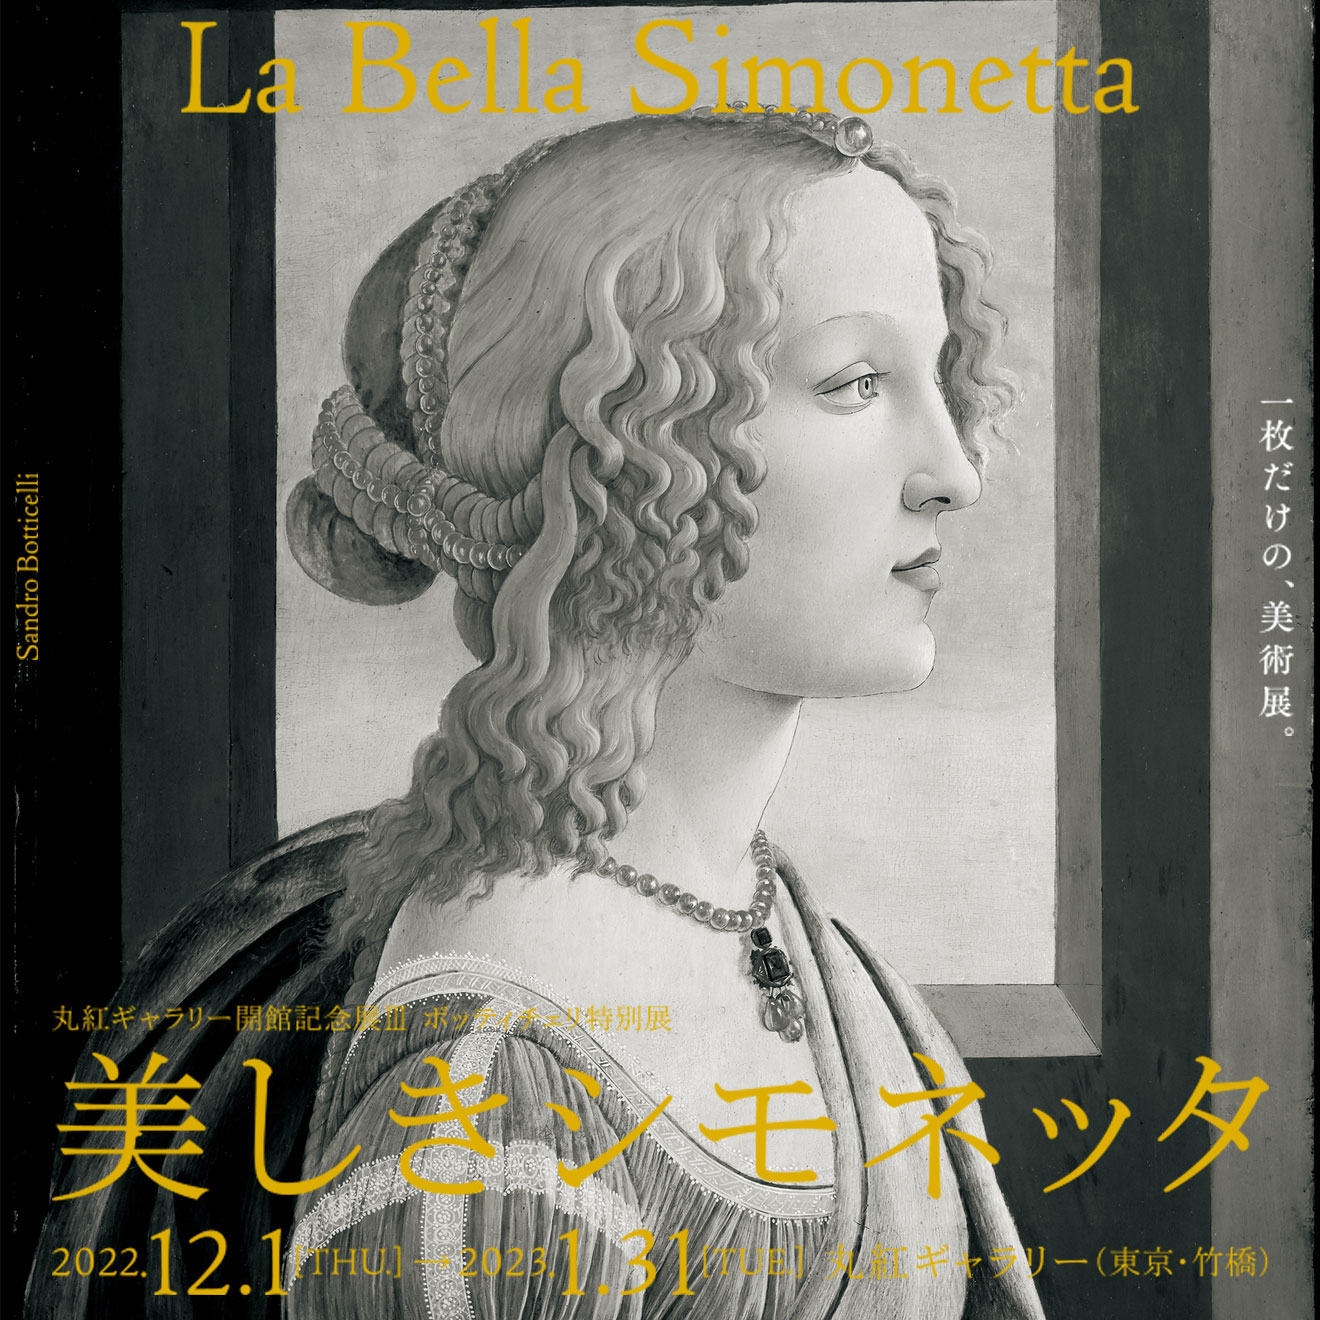 Marubeni Gallery Opening Exhibition III Botticelli Special Exhibition La Bella Simonetta